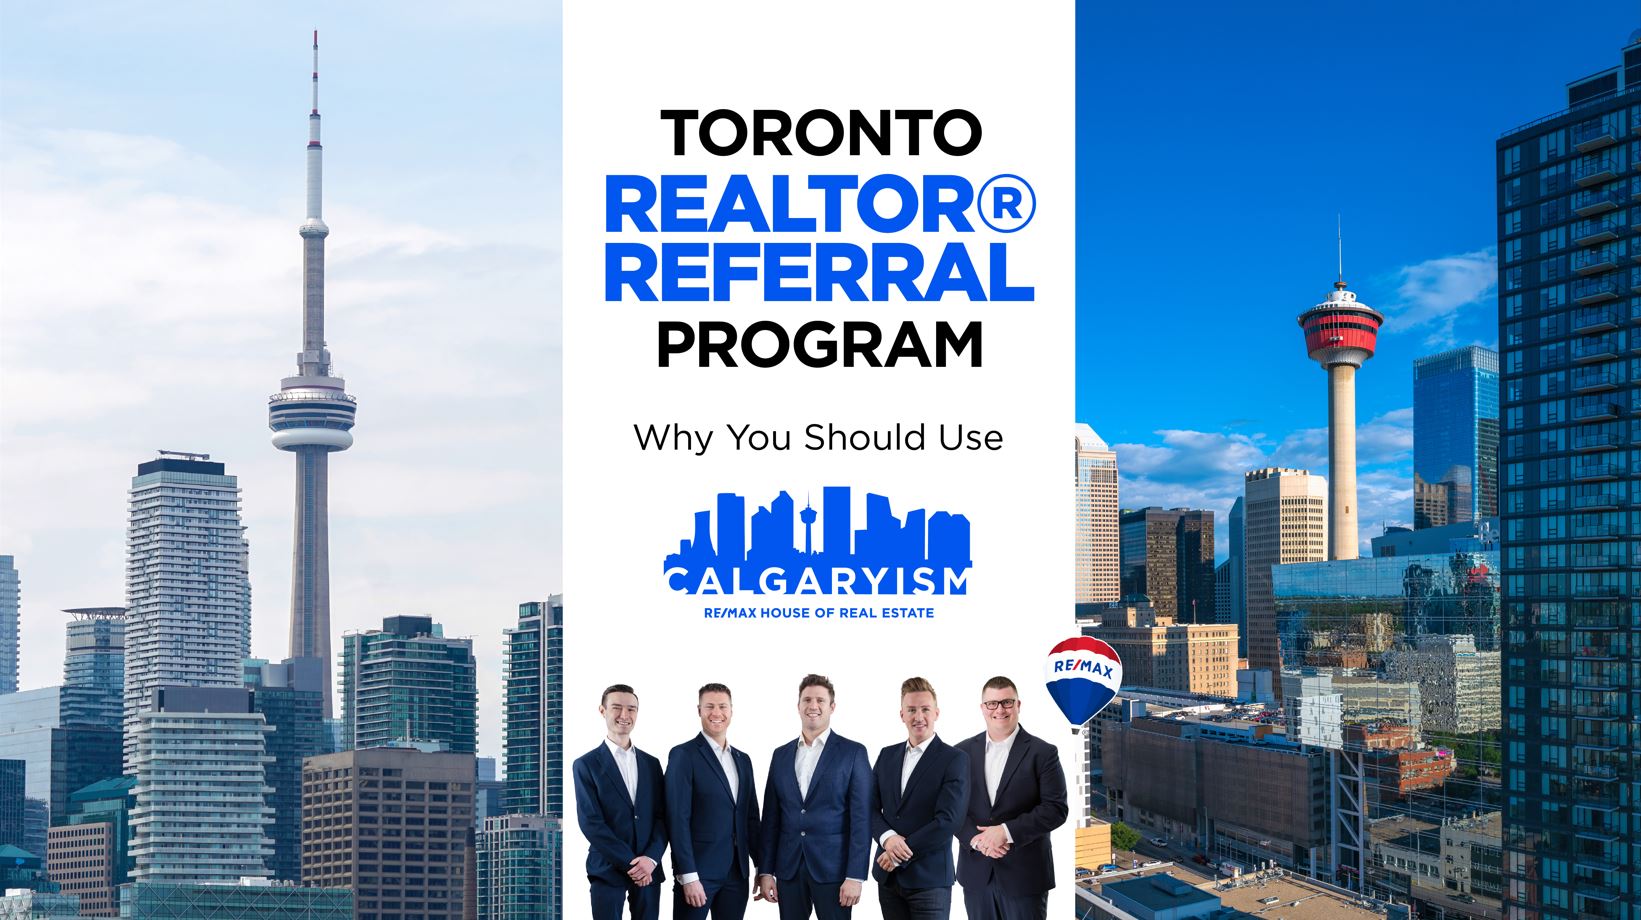 Toronto Realtor Referral Program - Why Use Calgaryism Real Estate Team for Toronto Realtor Buyers